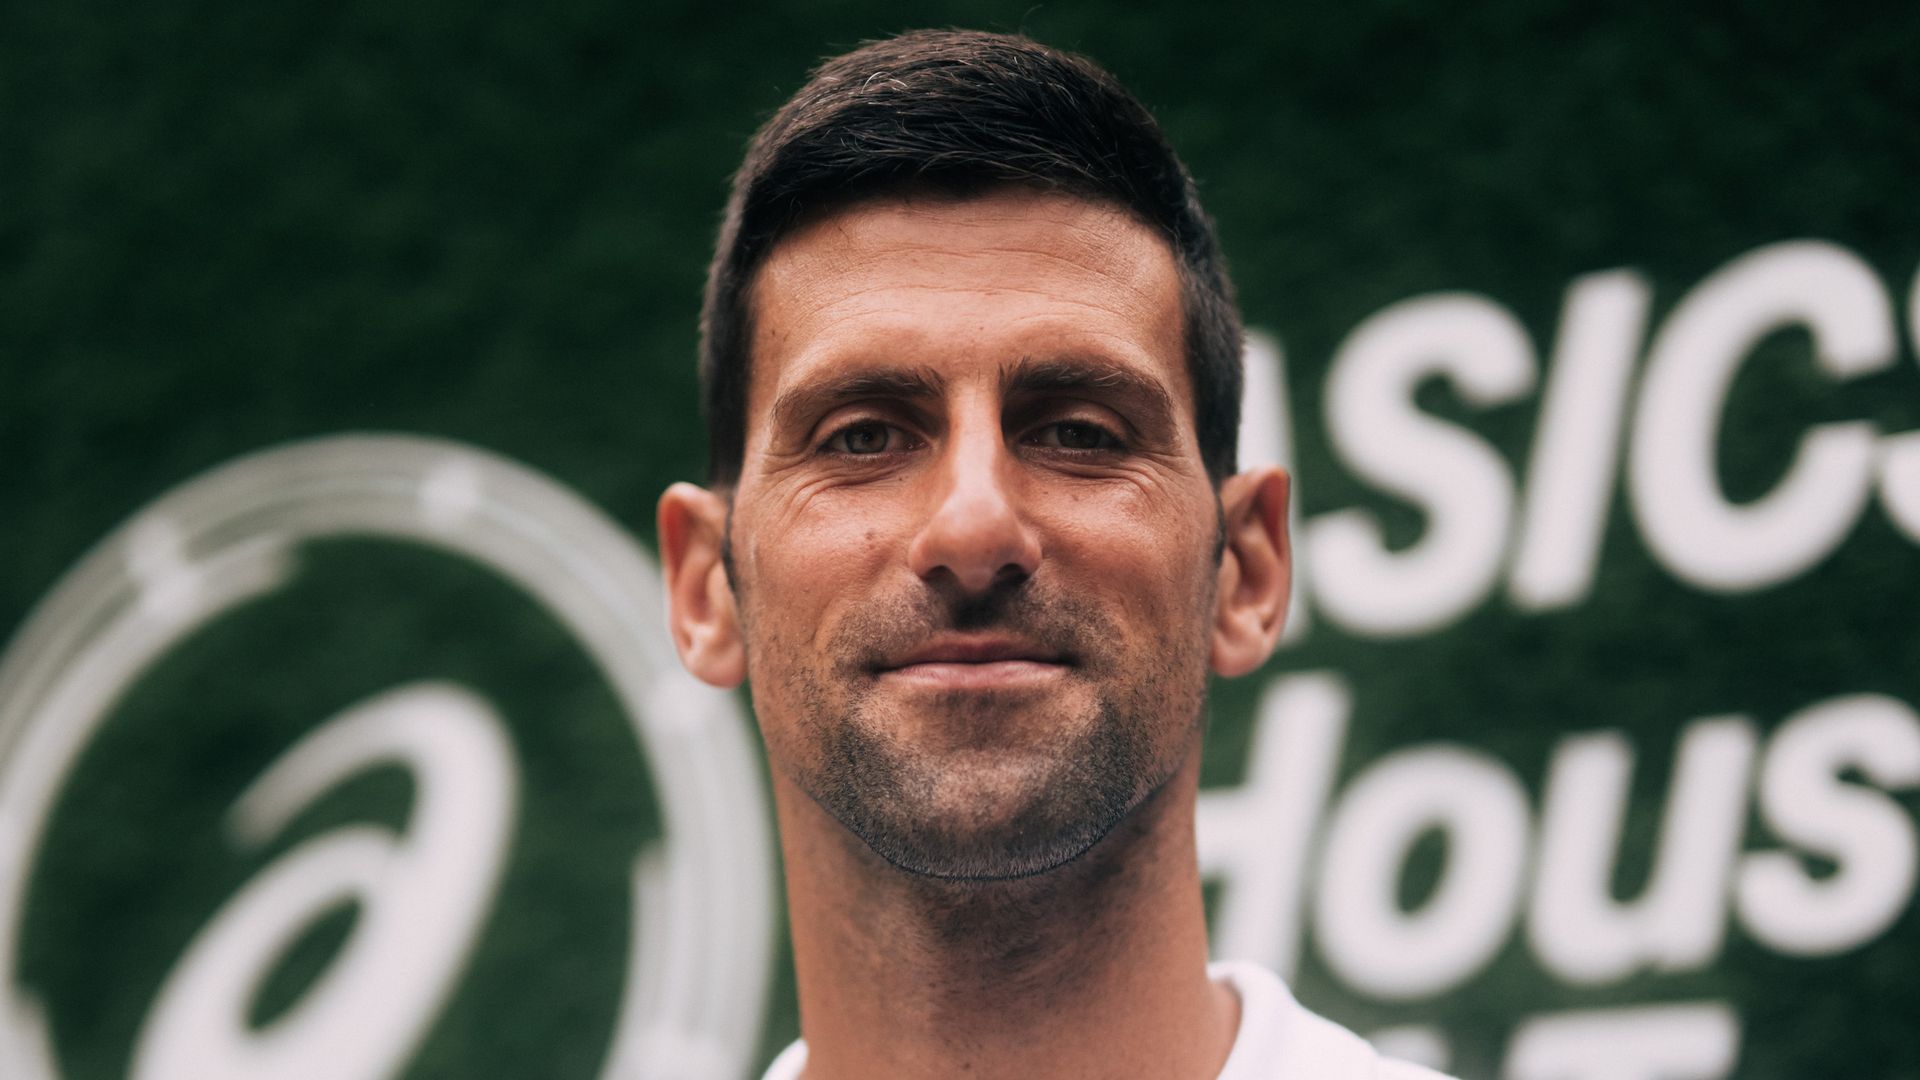 Novak Djokovic head shot